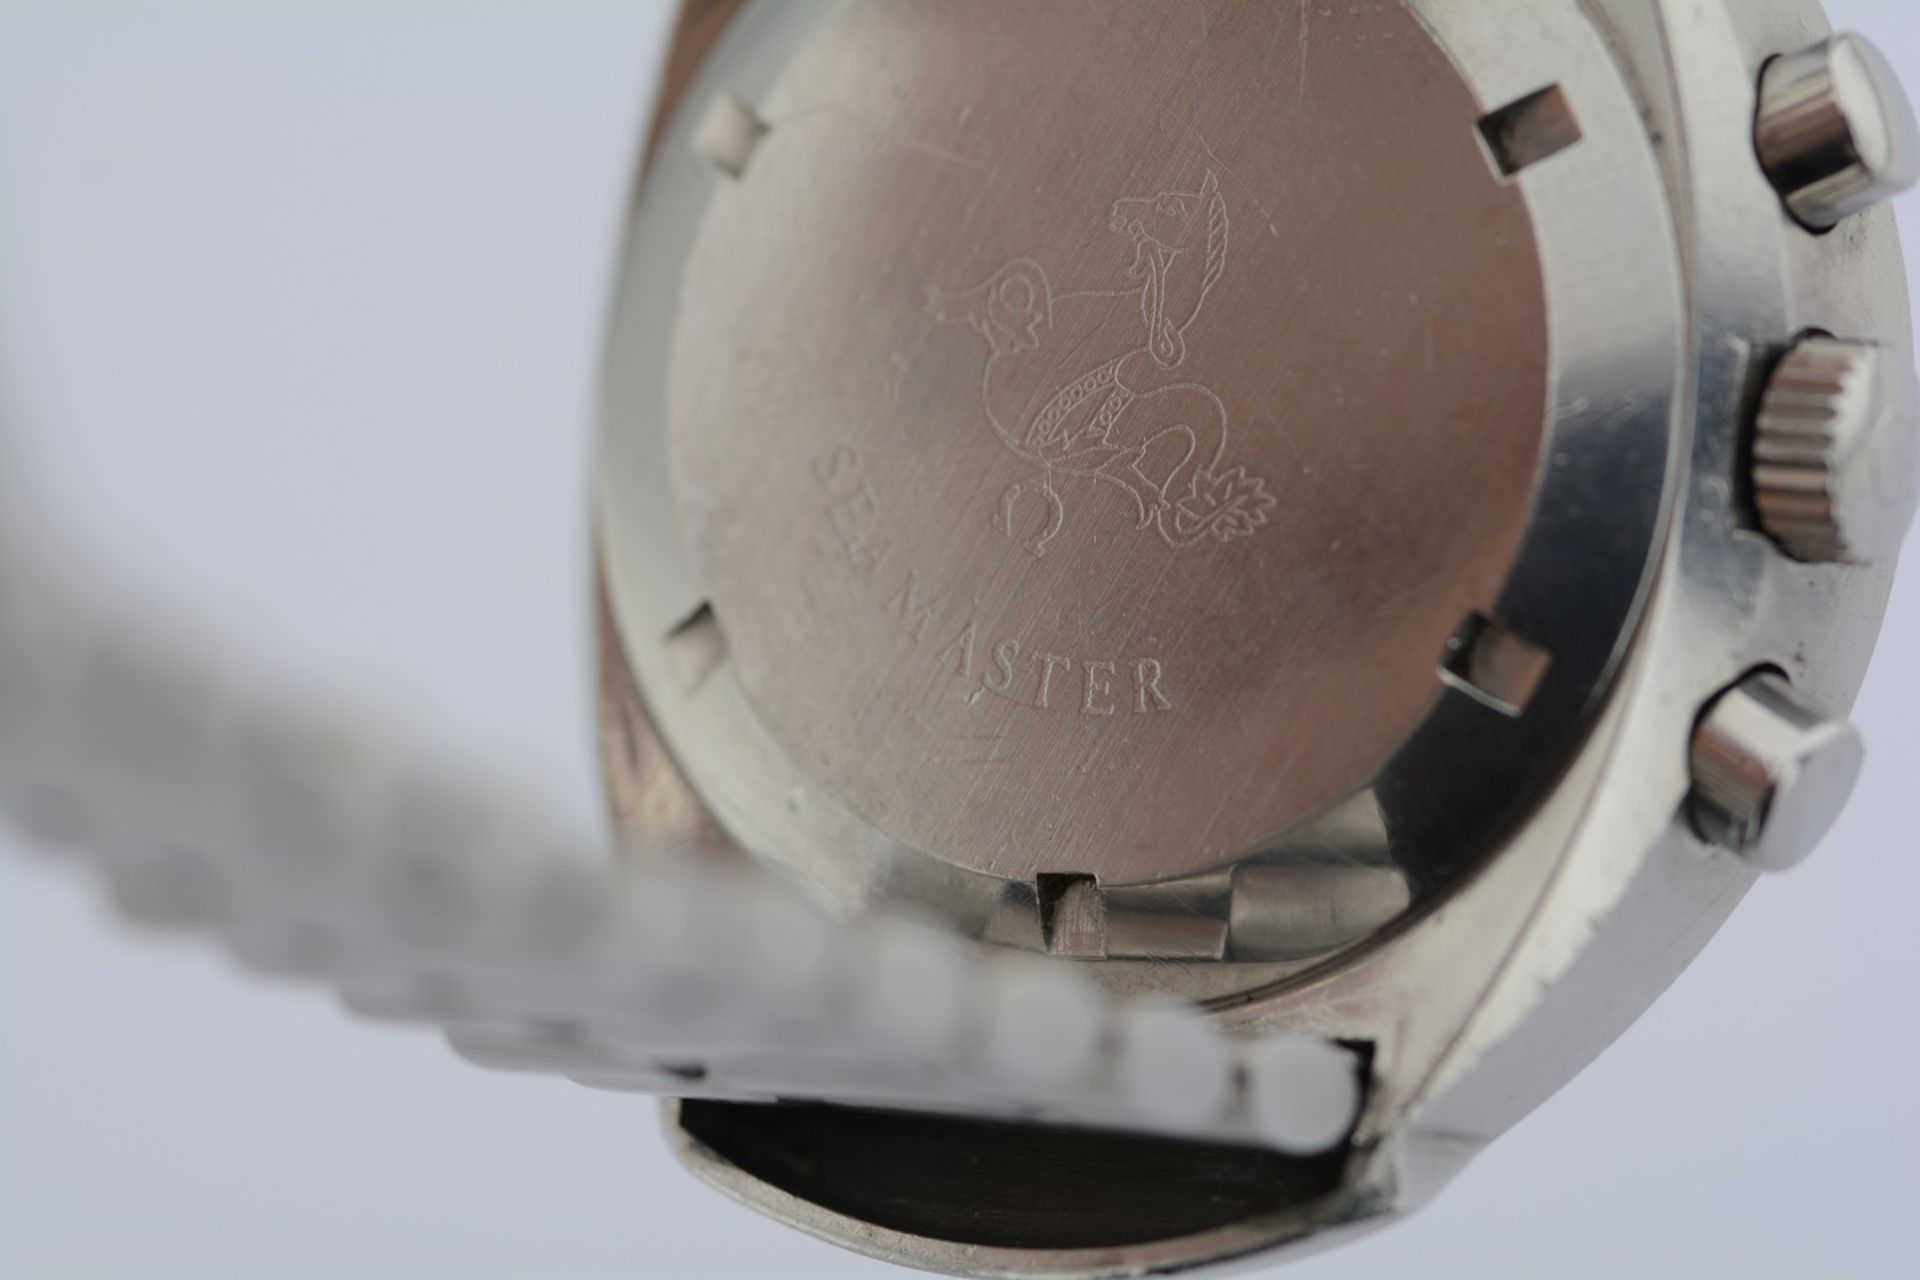 Omega / Speedmaster Mark III - Gentlmen's Gold/Steel Wrist Watch - Image 5 of 8